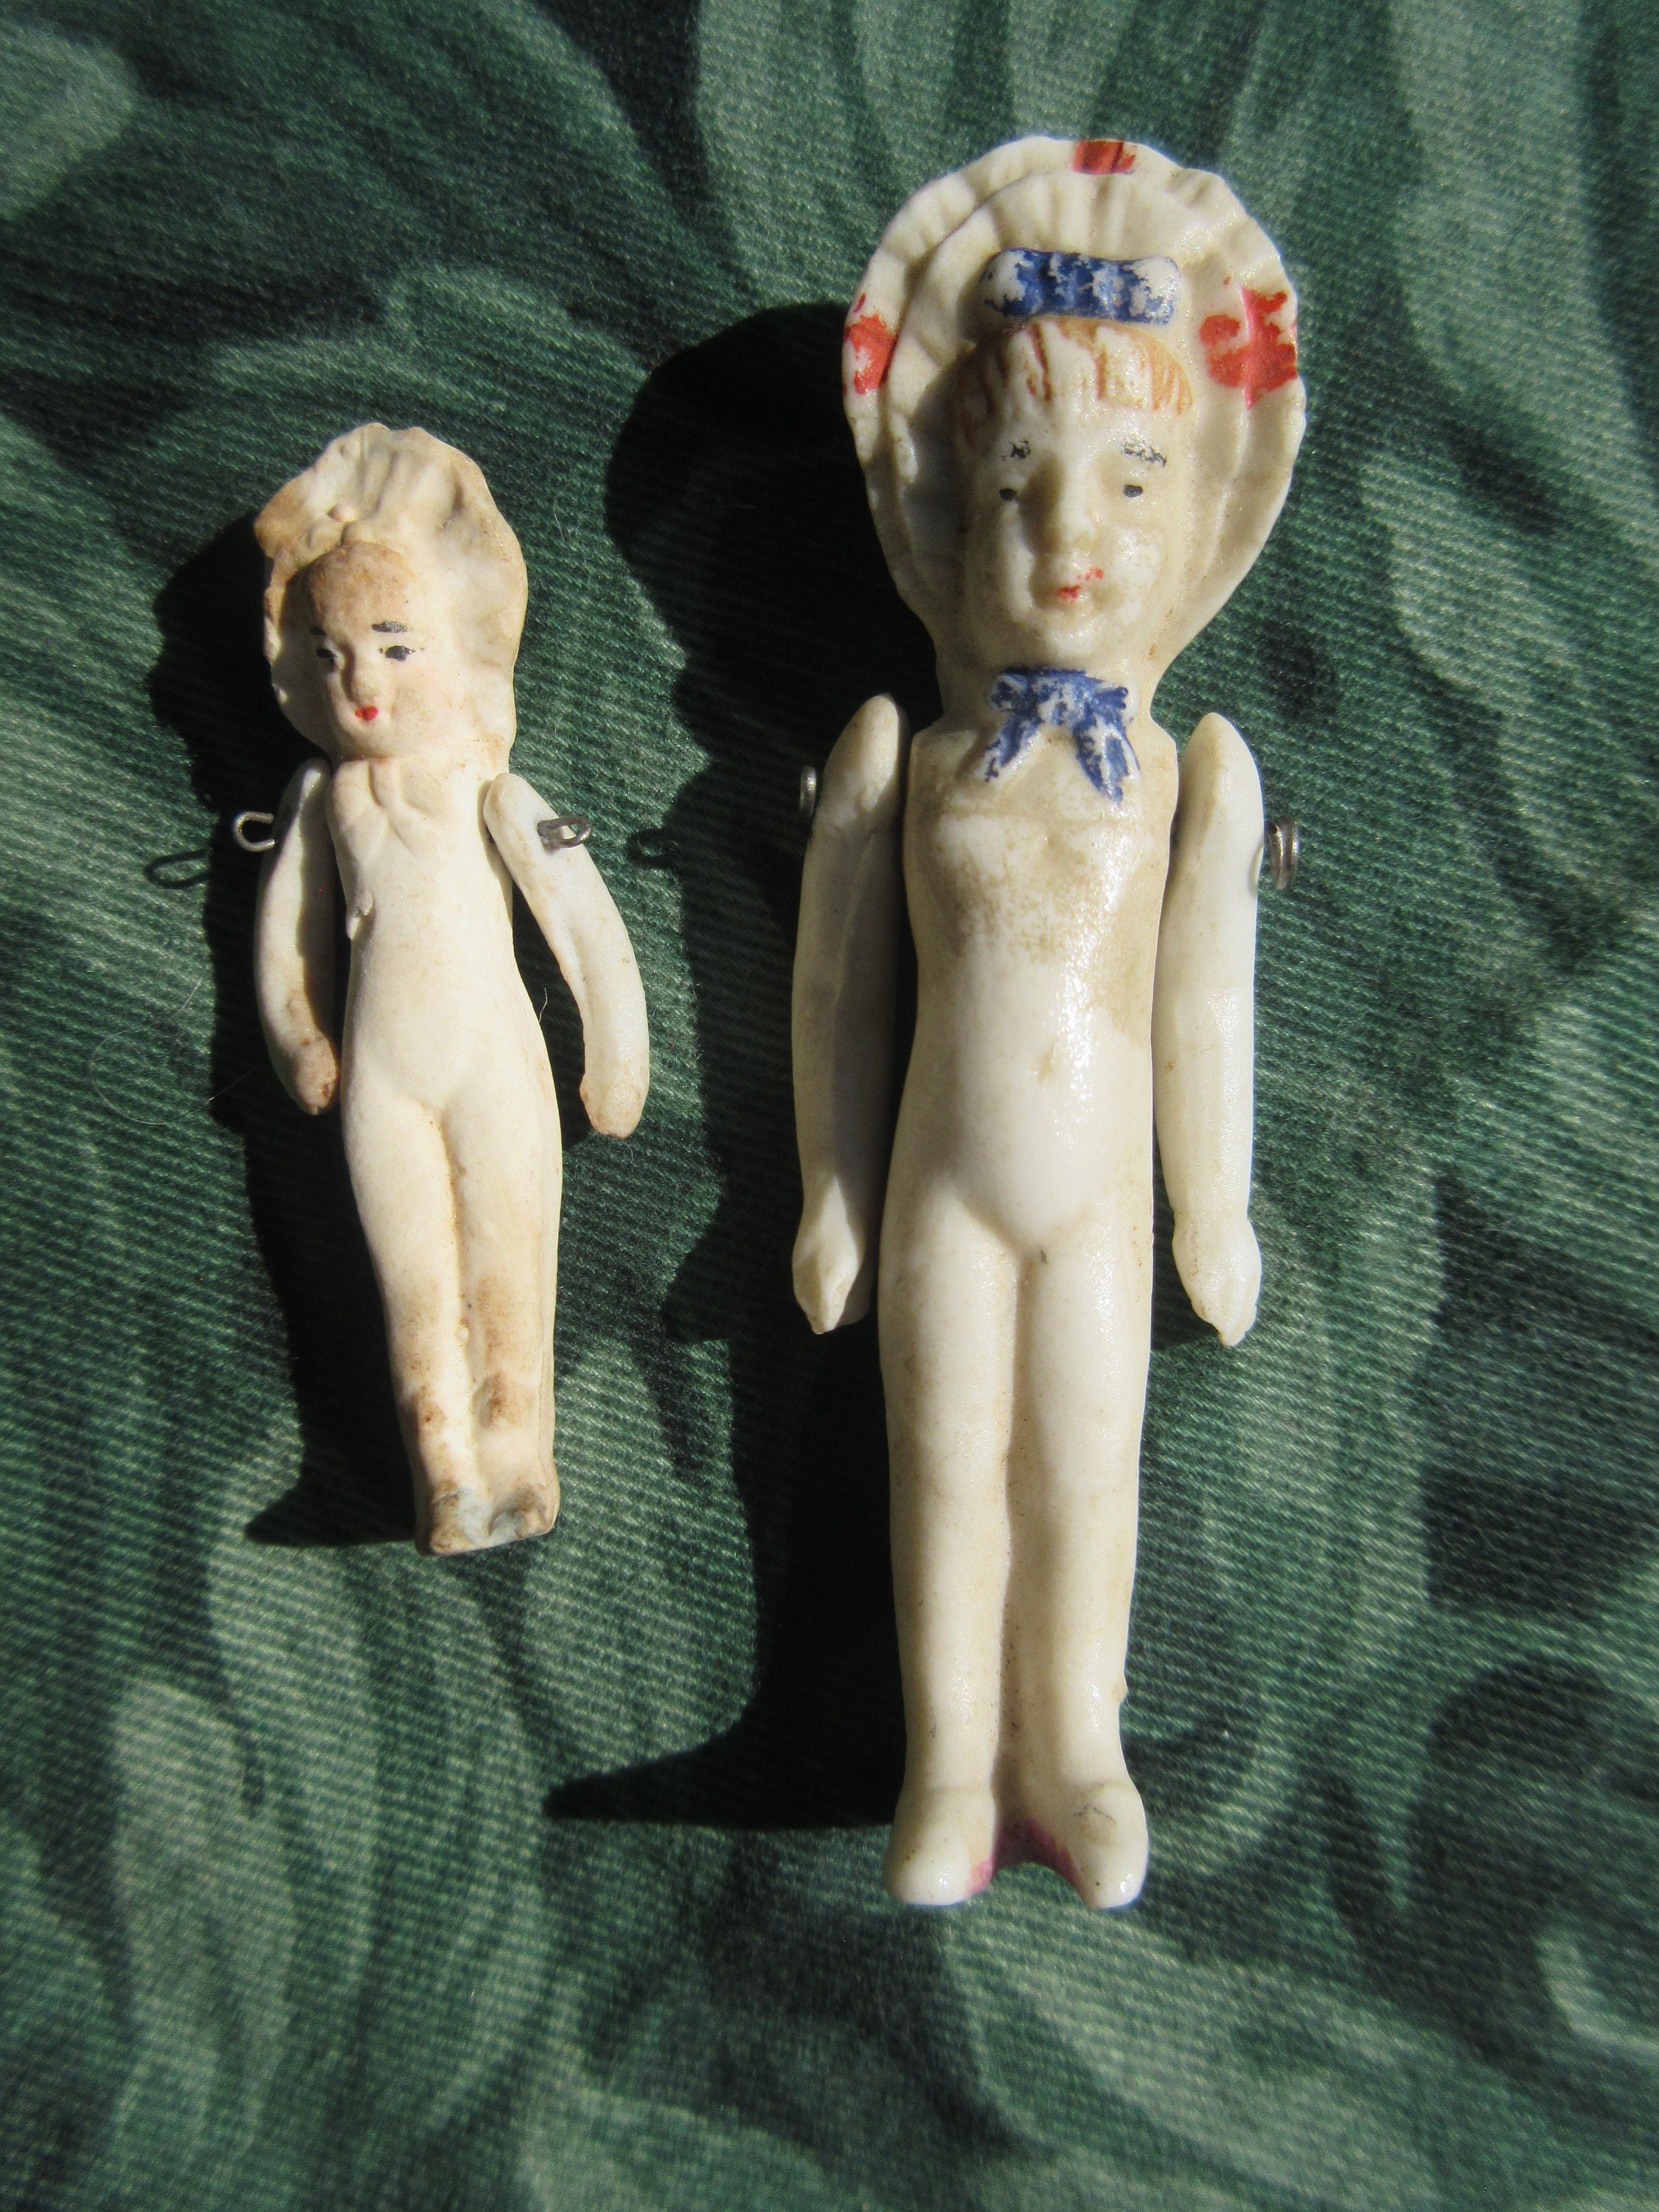 Antique Miniature Dolls / All-Bisque Dolls - Historical and Circus Figures  - Ref P464